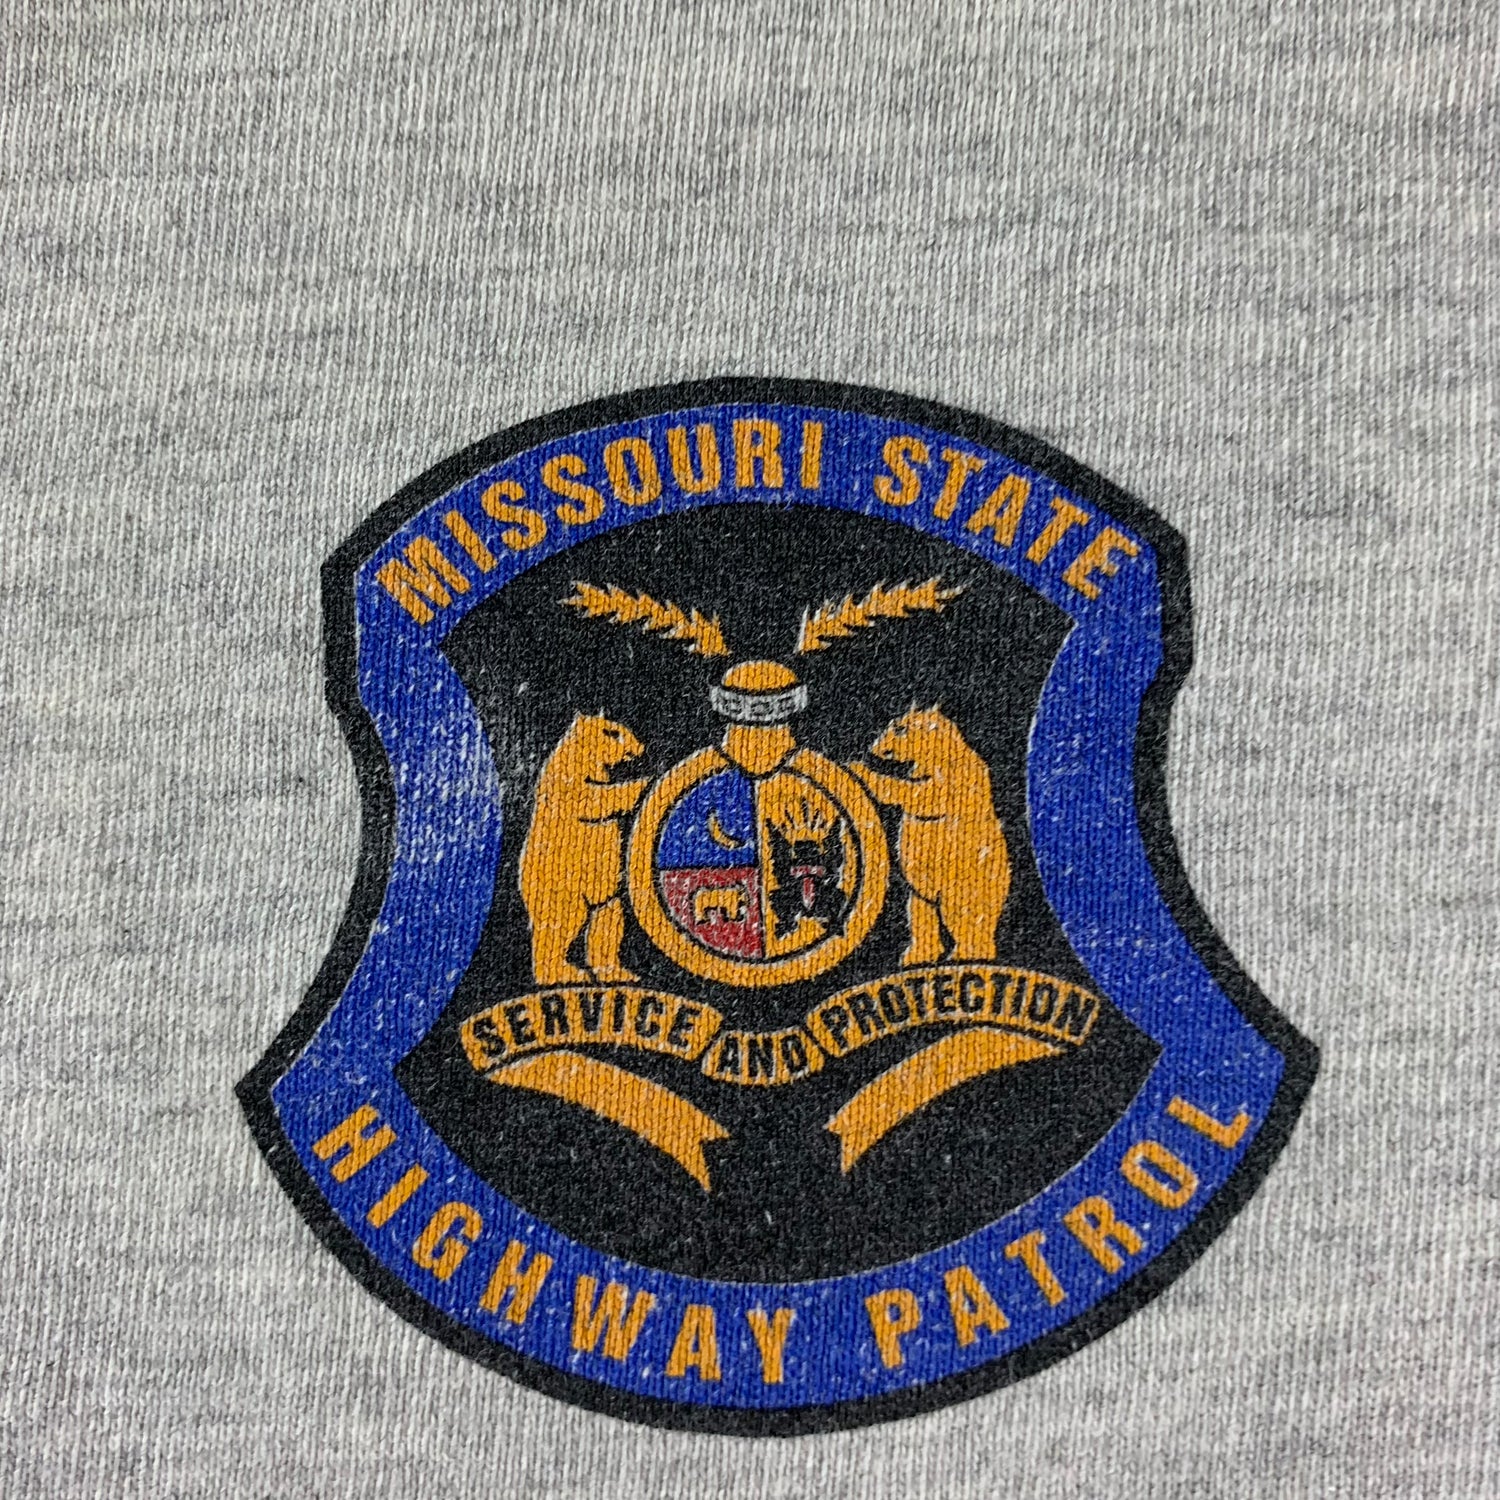 Vintage 1990s Missouri State Highway Patrol T-shirt size Medium